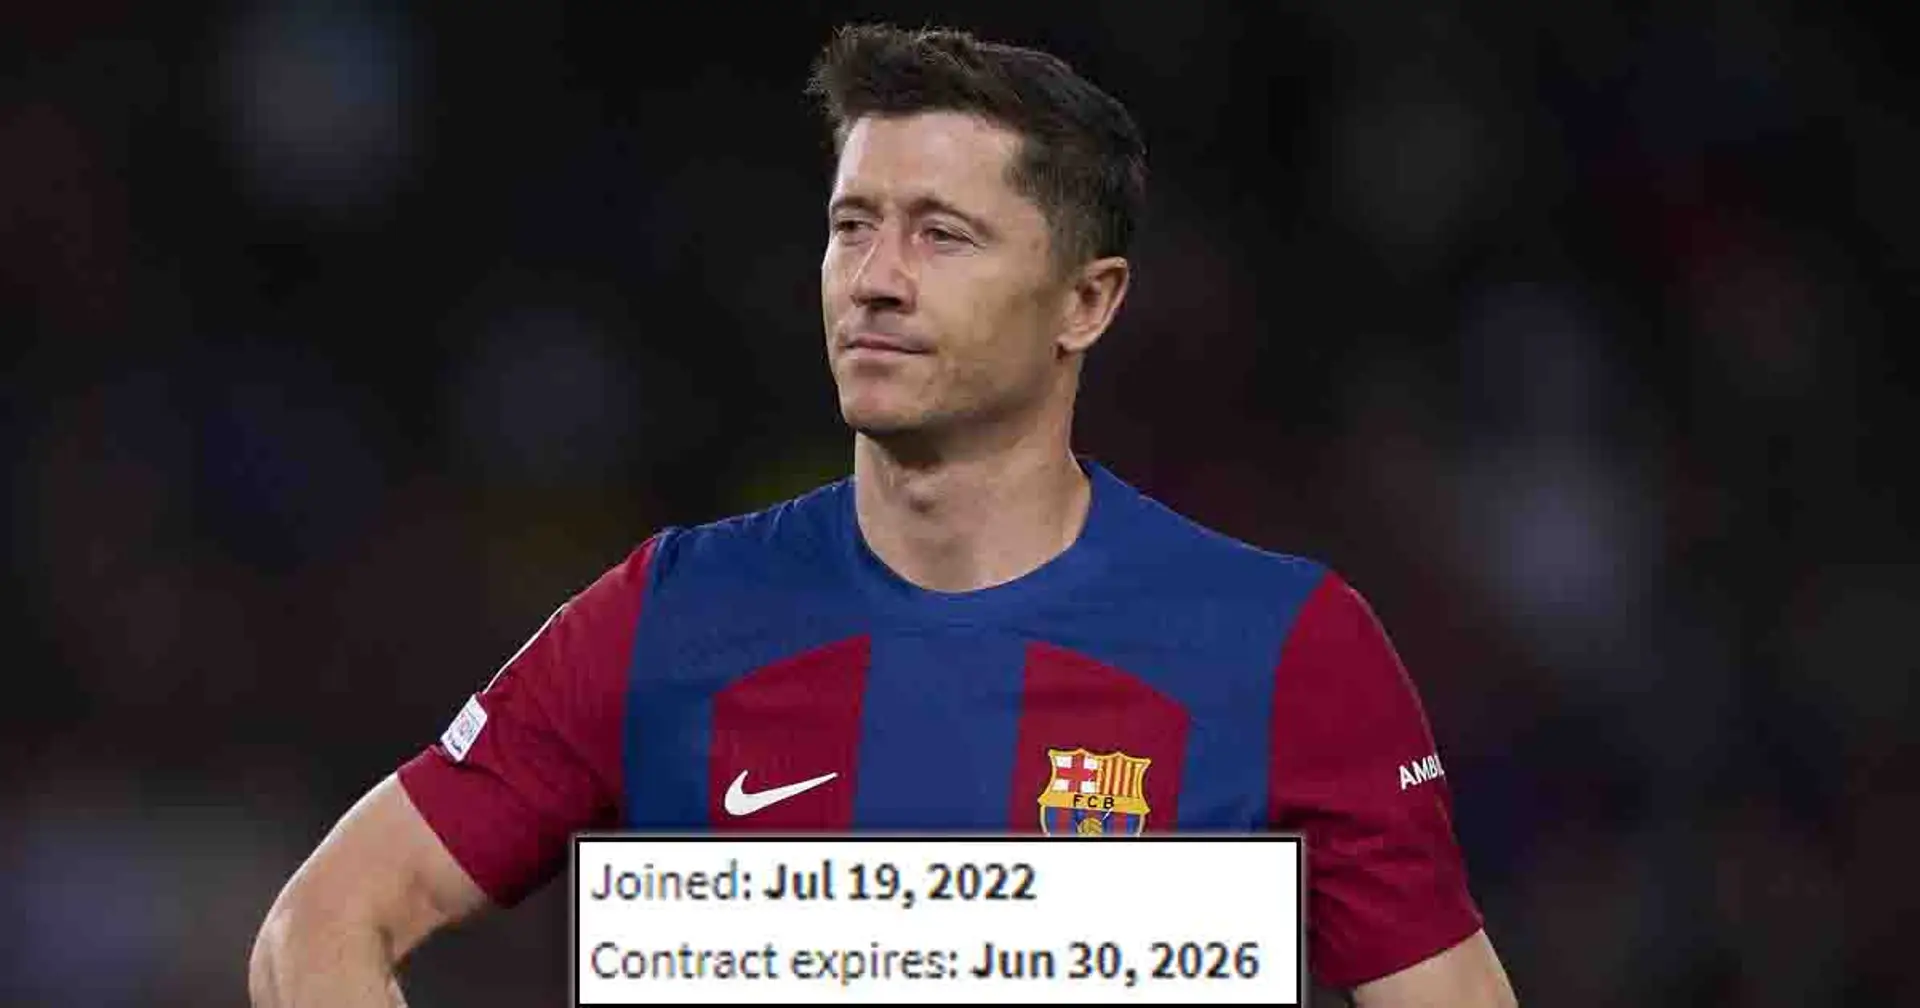 Barcelona 'will consider bids' for Lewandowski sale, real reason revealed (reliability: 4 stars)